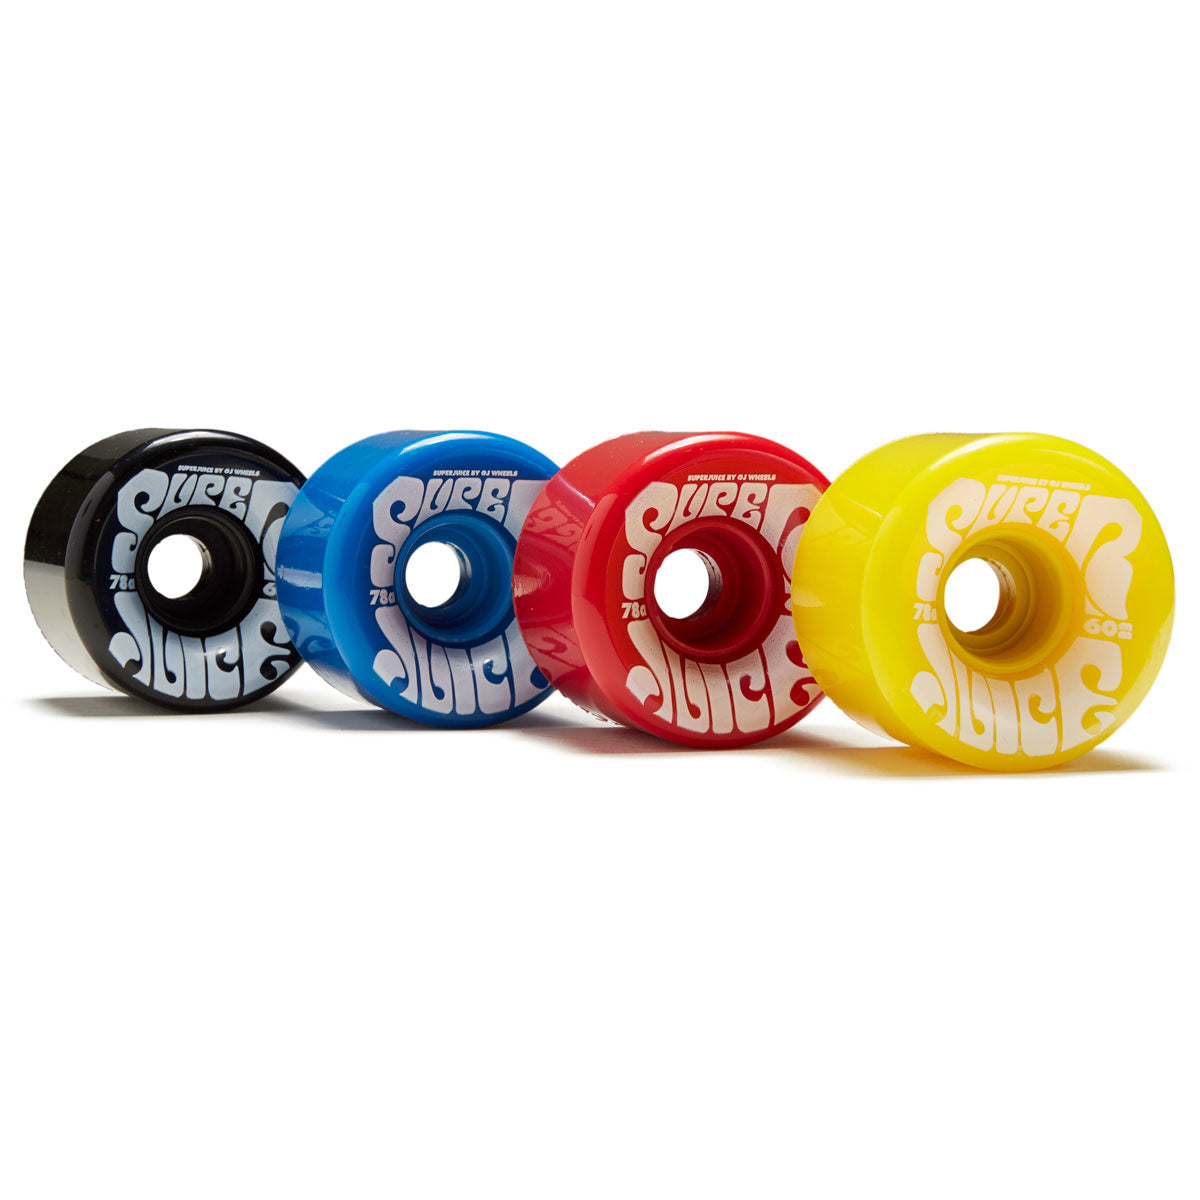 OJ Super Juice 78a Skateboard Wheels - CMYK Mix Up - 60mm image 1